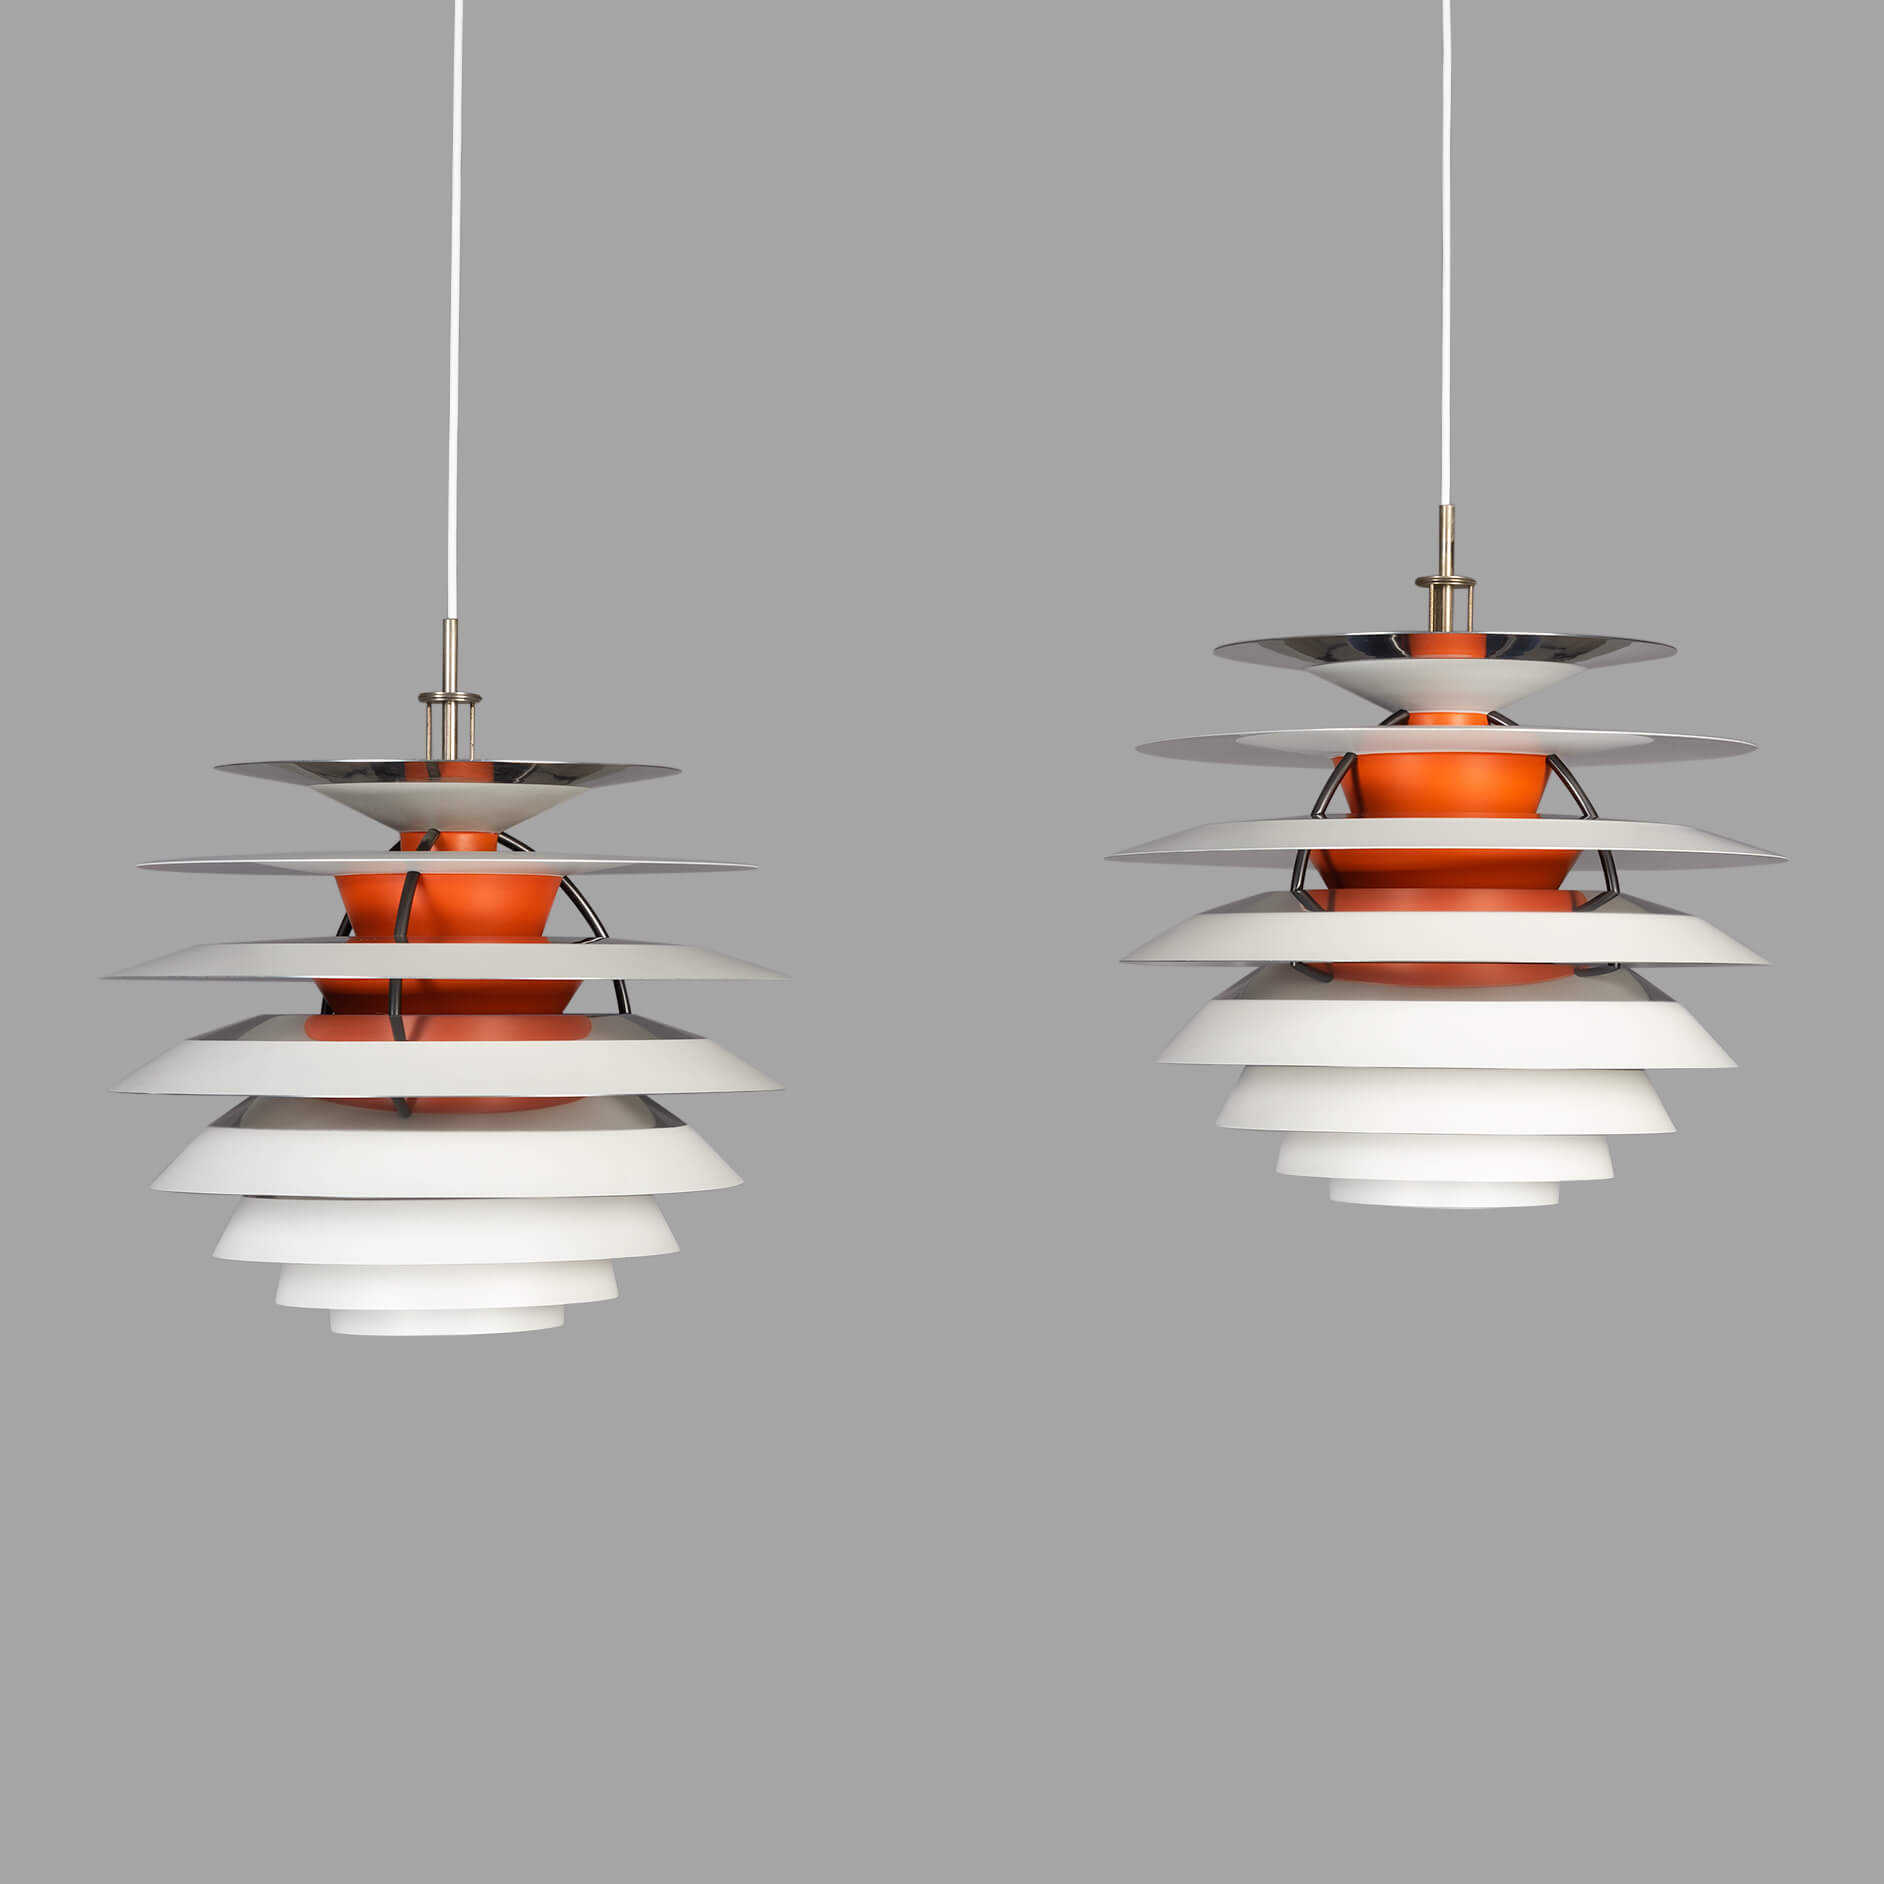 PH 'Kontrast' design lamp